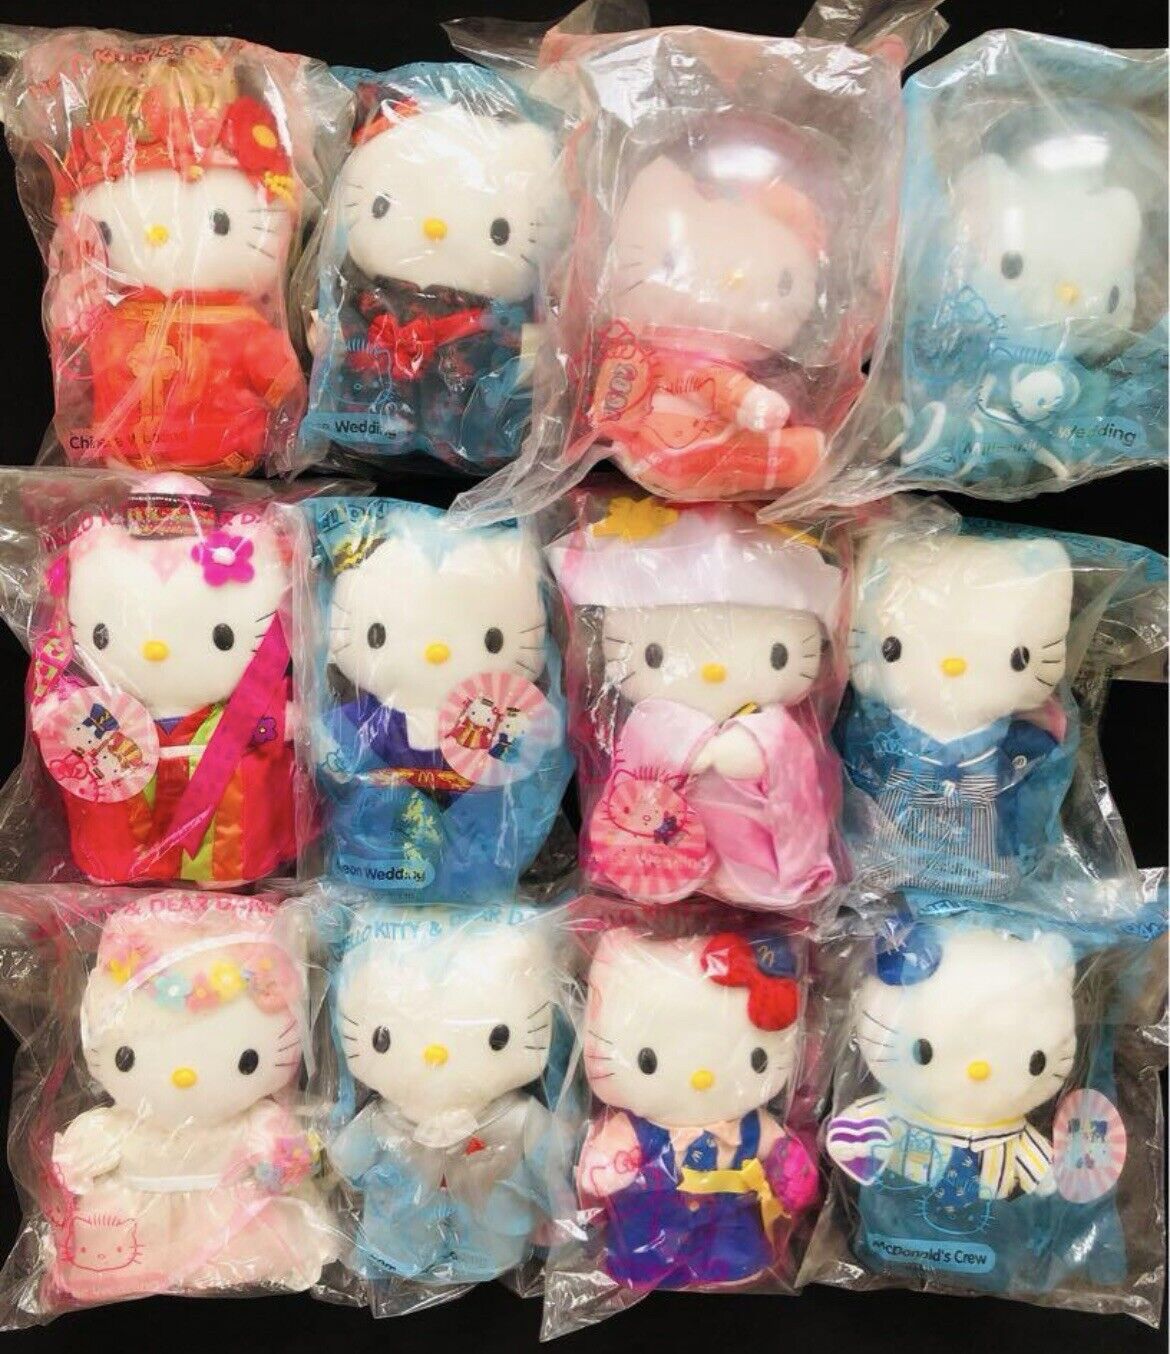 World Hello Kitty 1999 Sanrio Plush Toy Doll Weding Complete Set New Rare